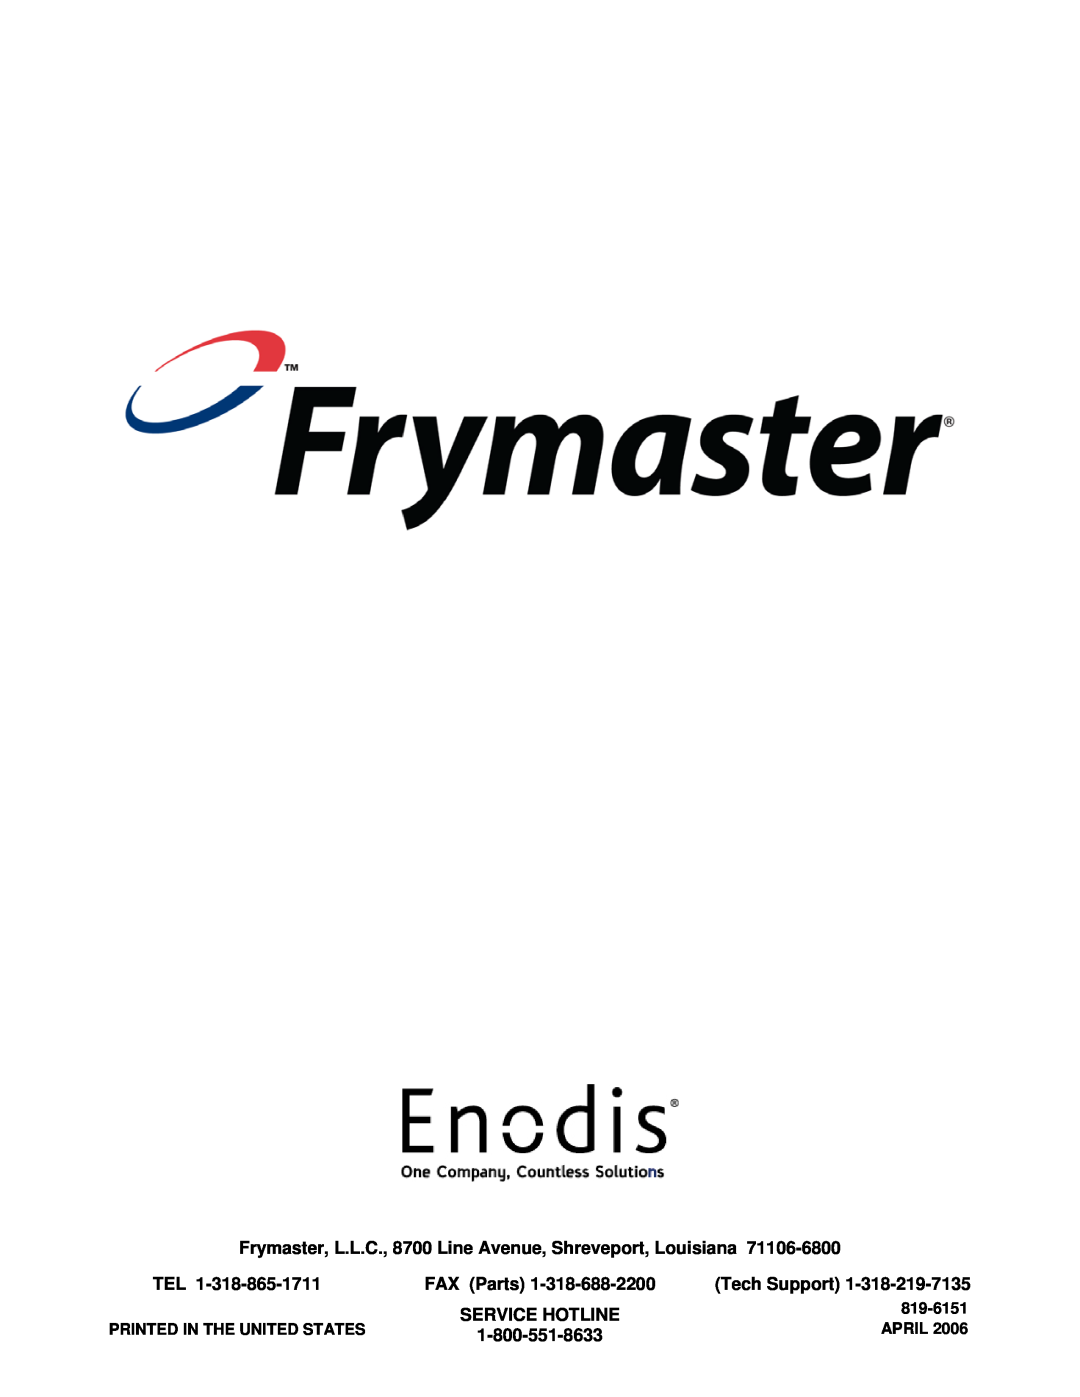 Frymaster MRE14 SERIES warranty FAX Parts, Tech Support, 1-318-219-7135, Service Hotline, 1-800-551-8633, 819-6151, April 